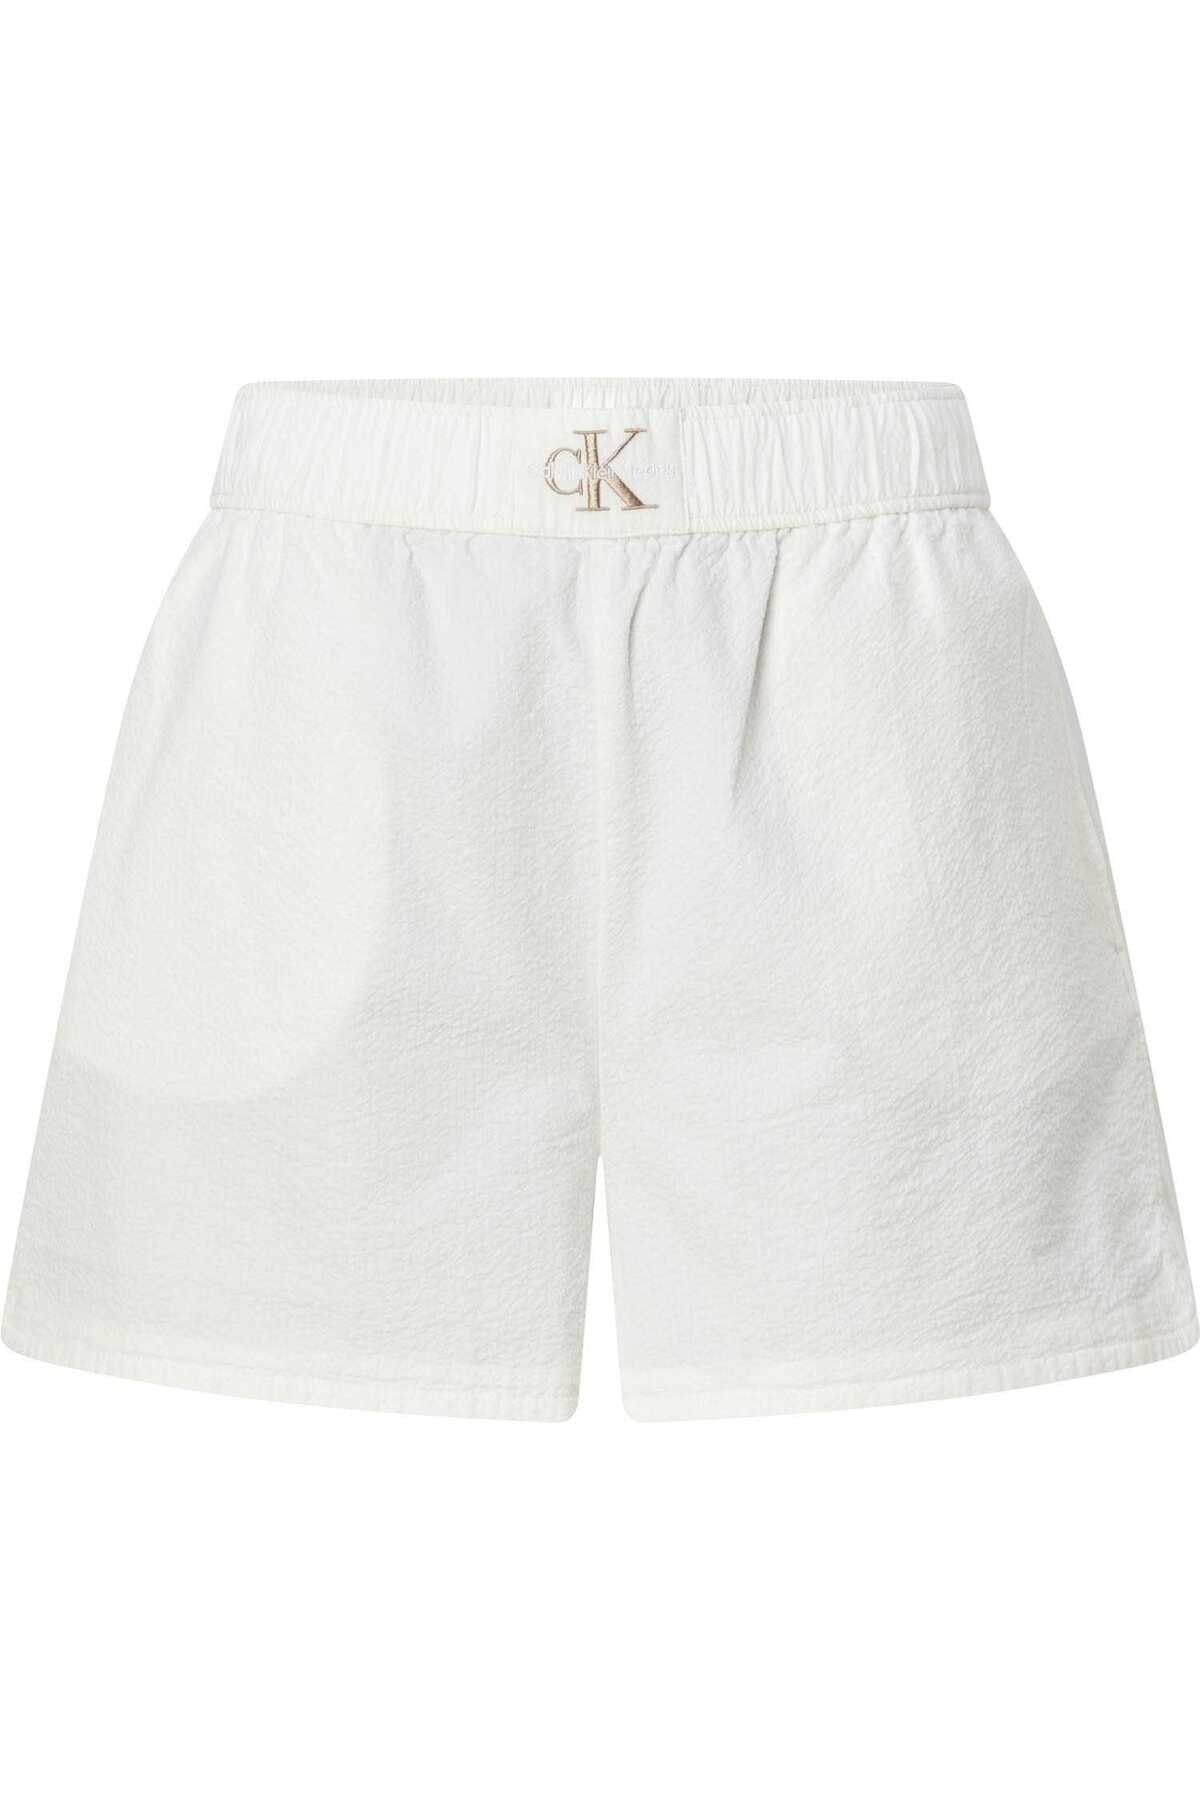 Calvin Klein Seersucker Relaxed Shorts